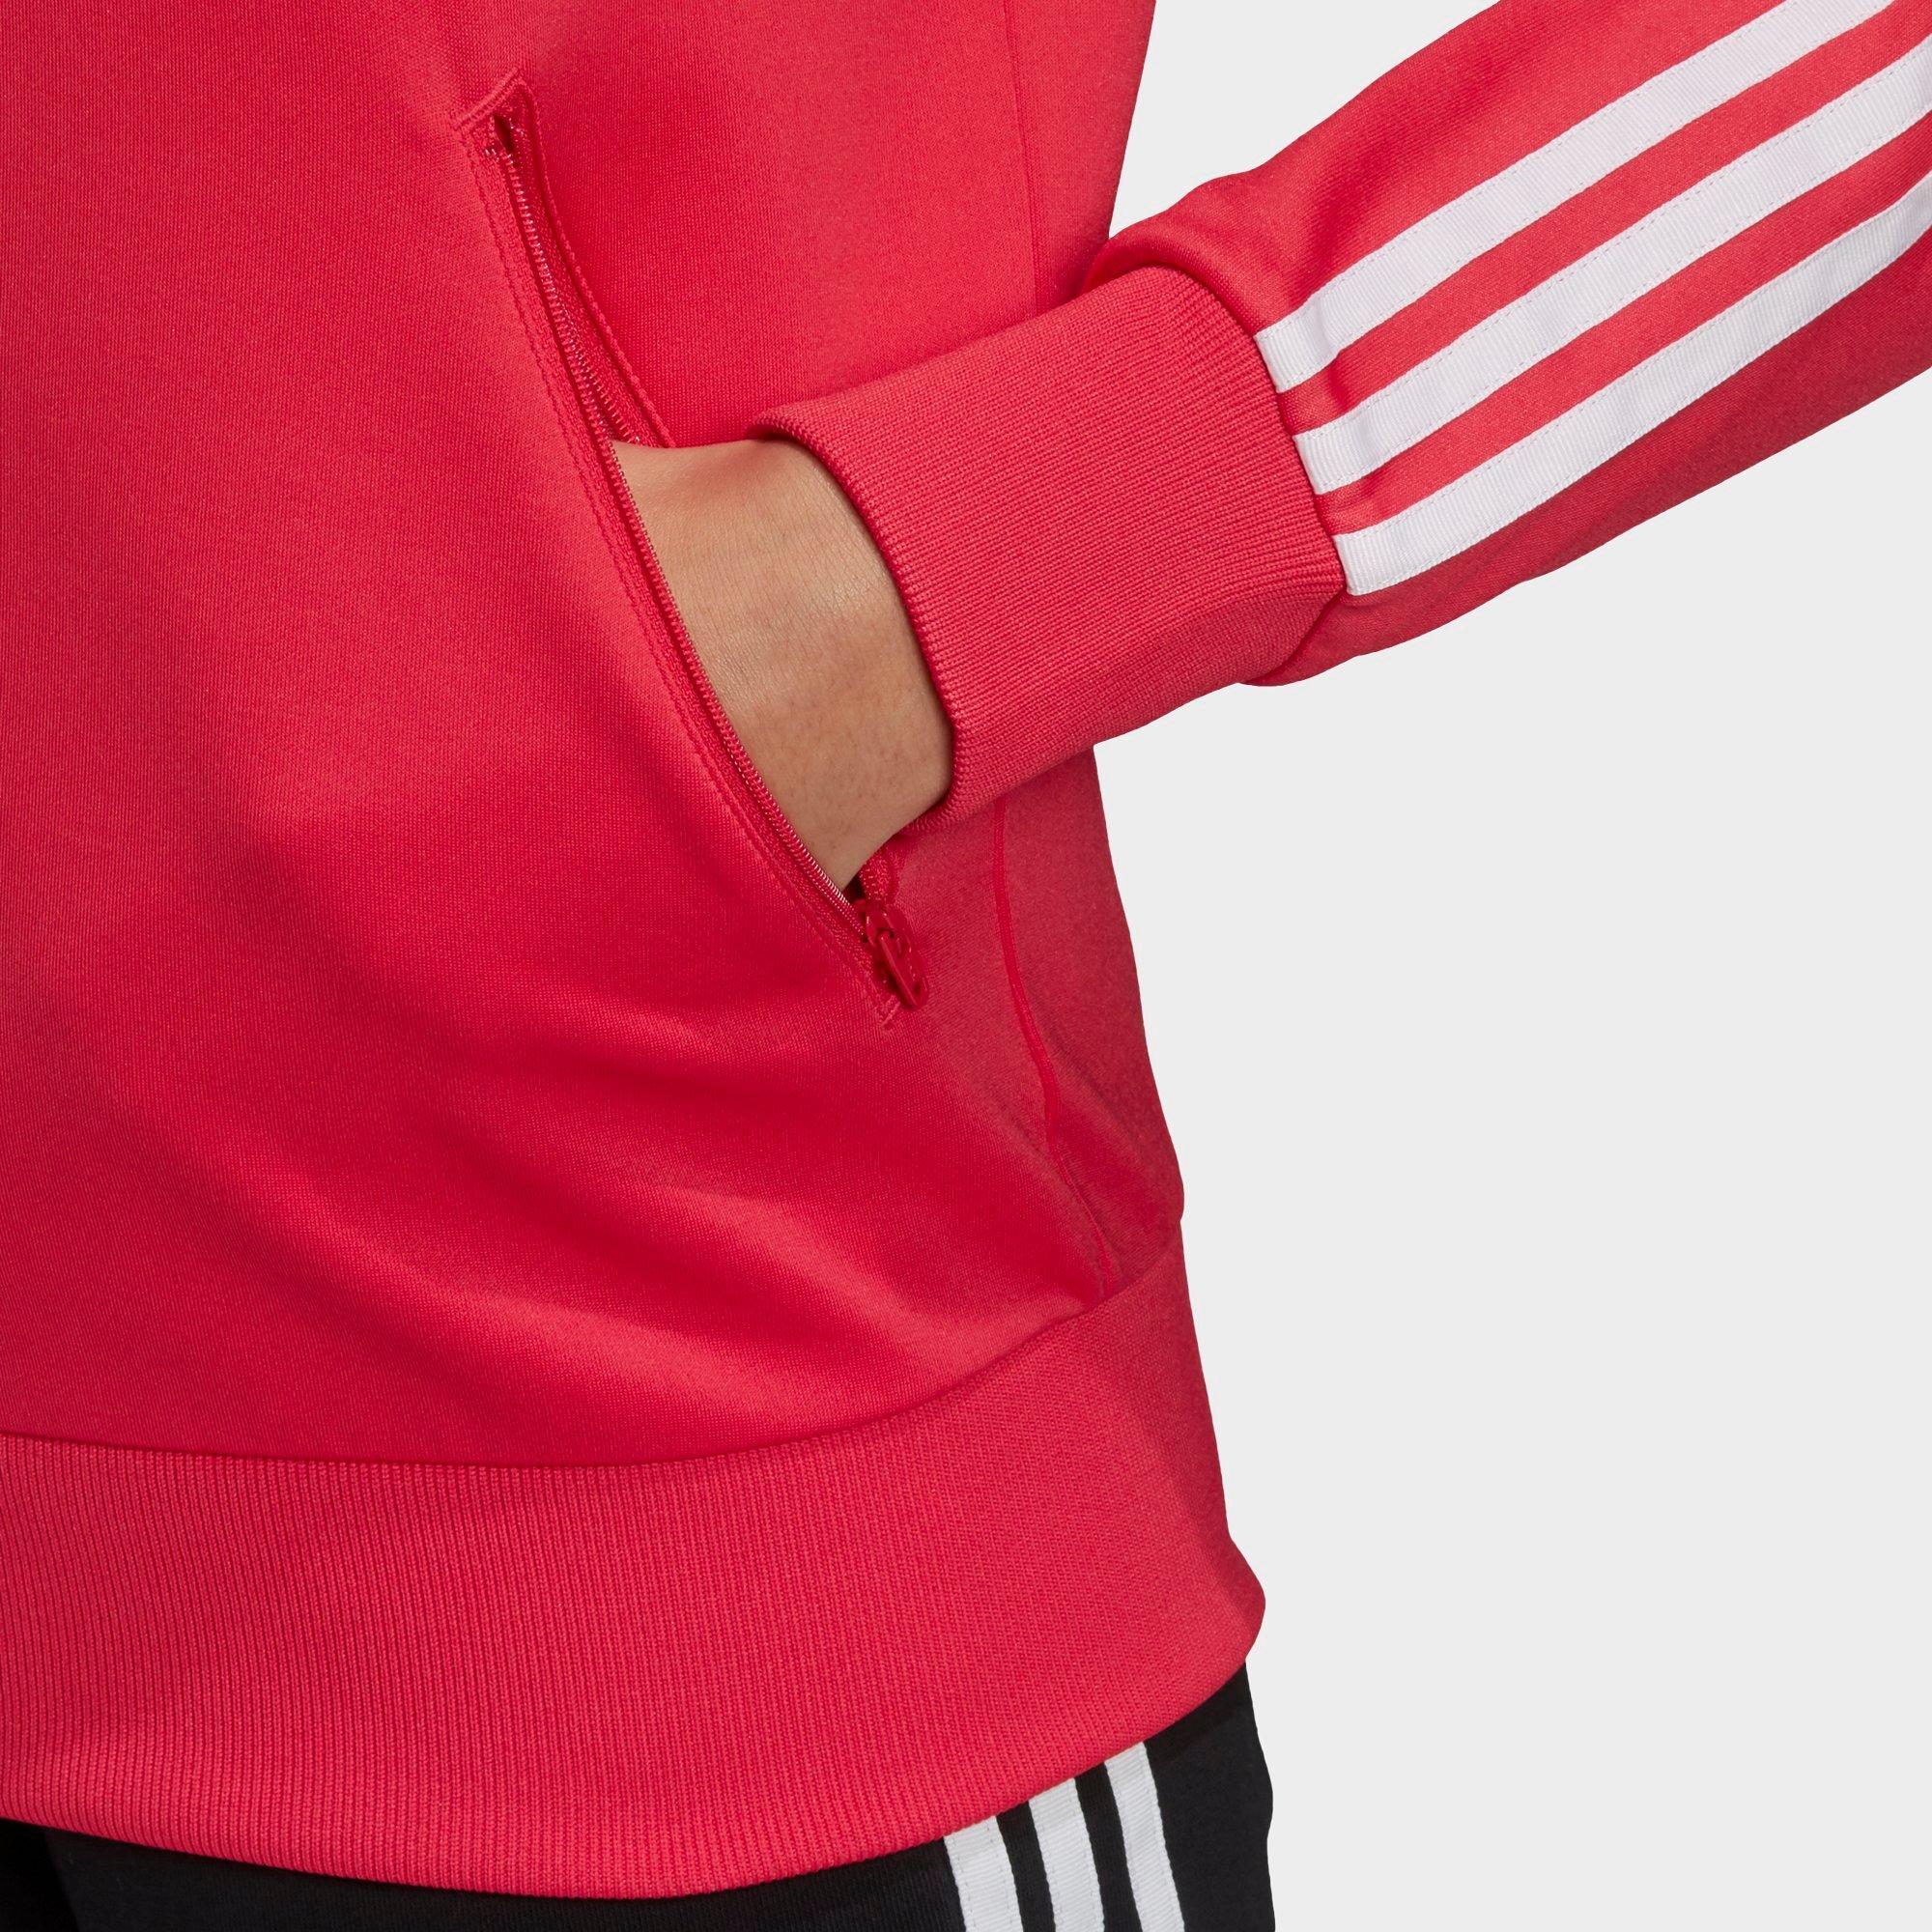 adidas 3 stripe pink track jacket